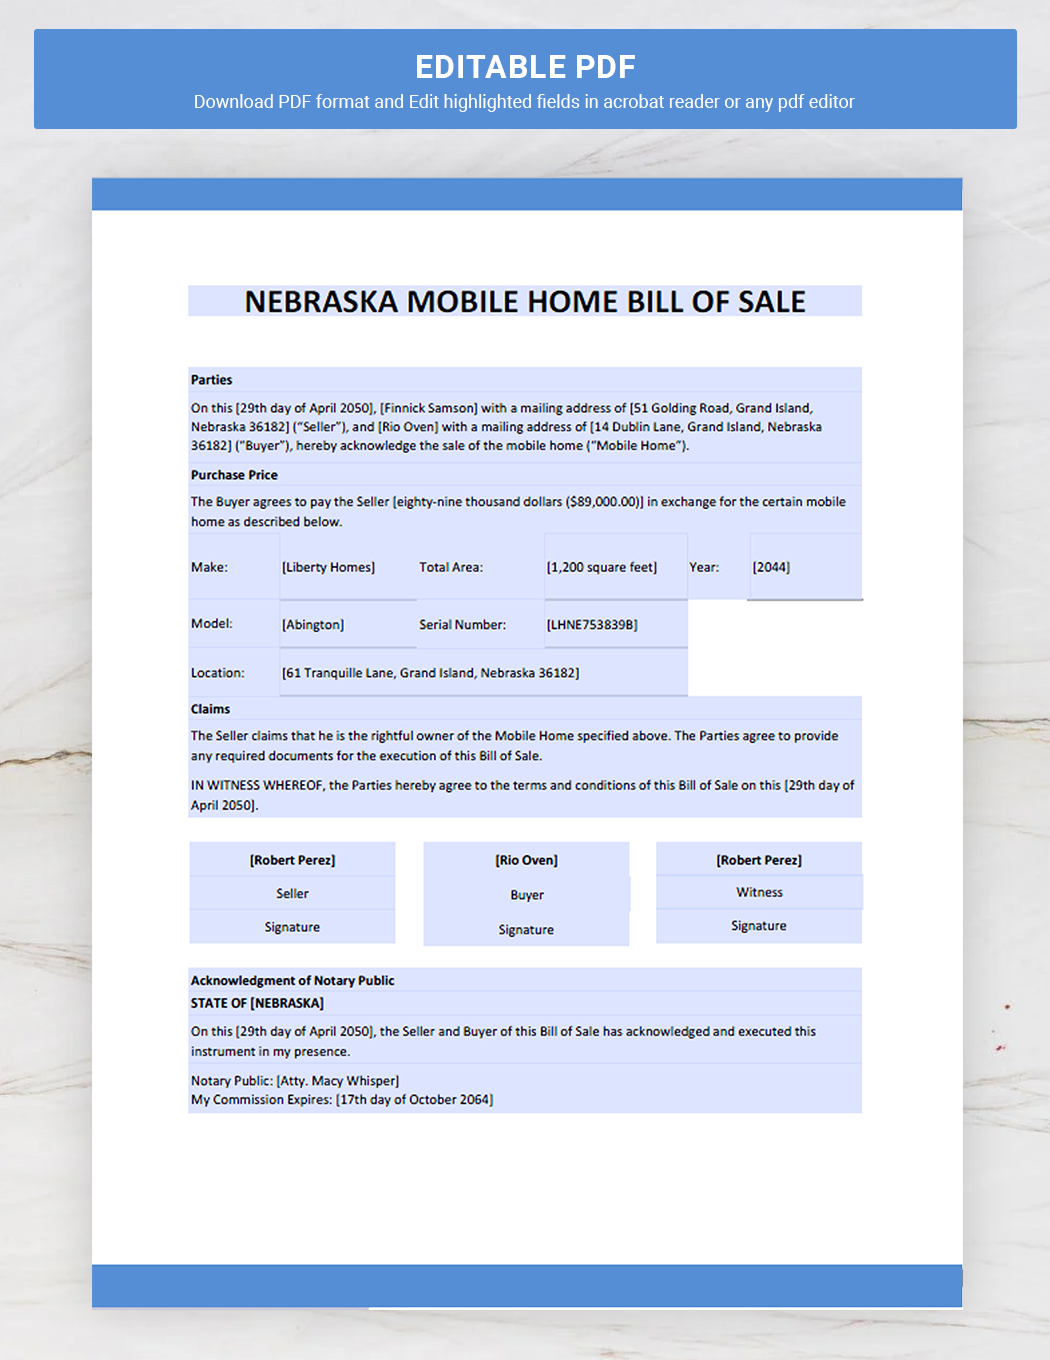 Nebraska Mobile Home Bill of Sale Form Template